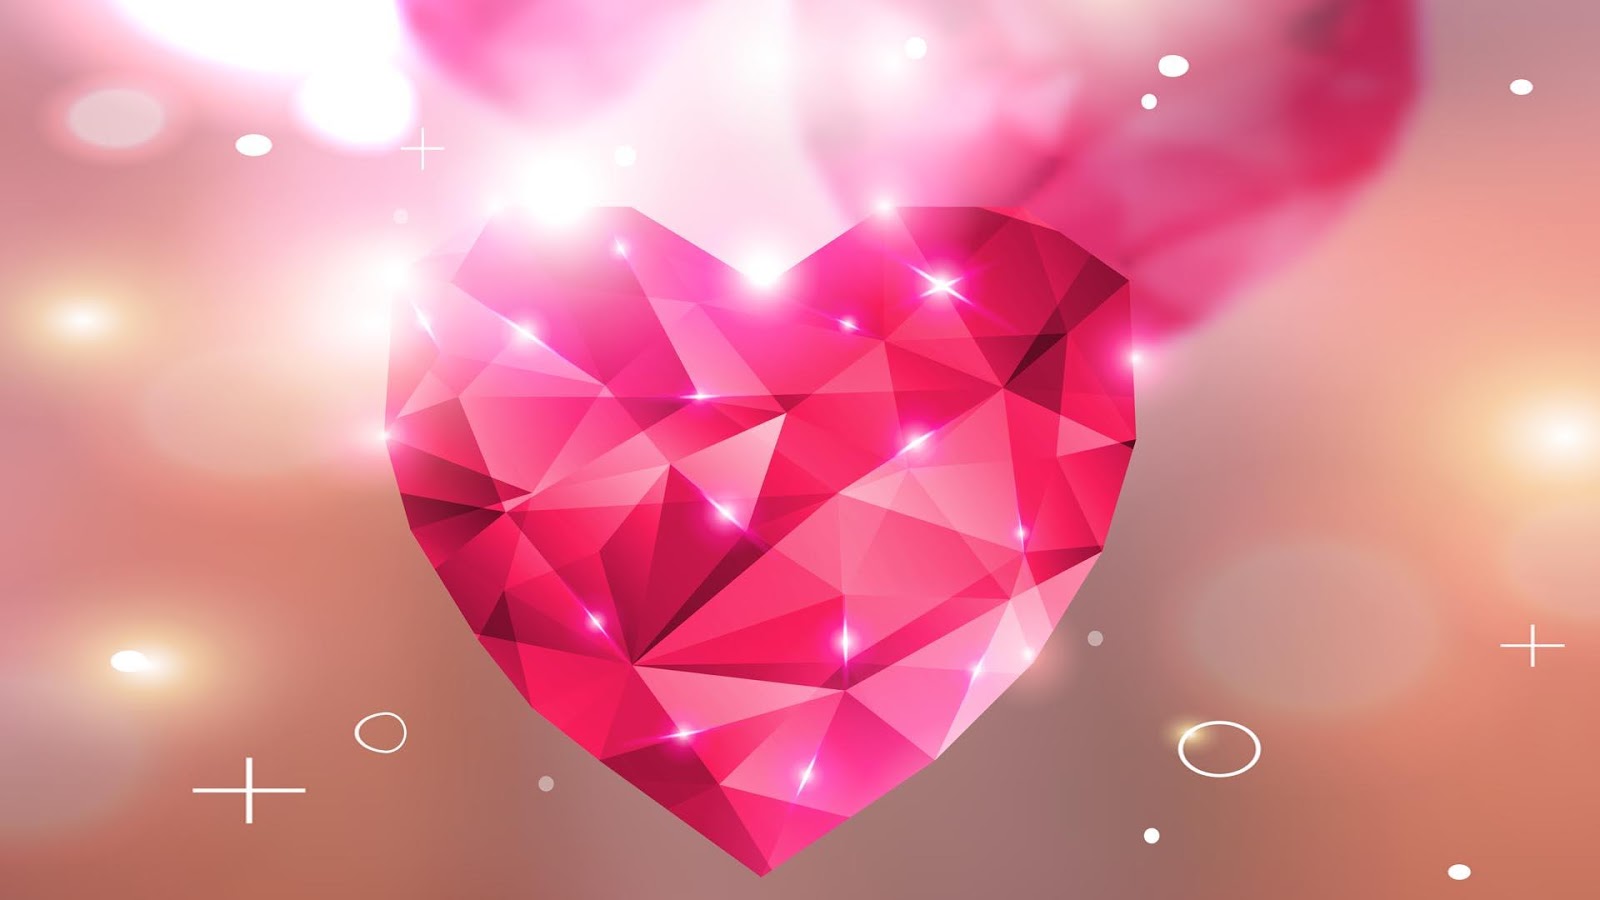 Pink Diamond Heart Wallpaper HD Wallpapers on picsfaircom 1600x900